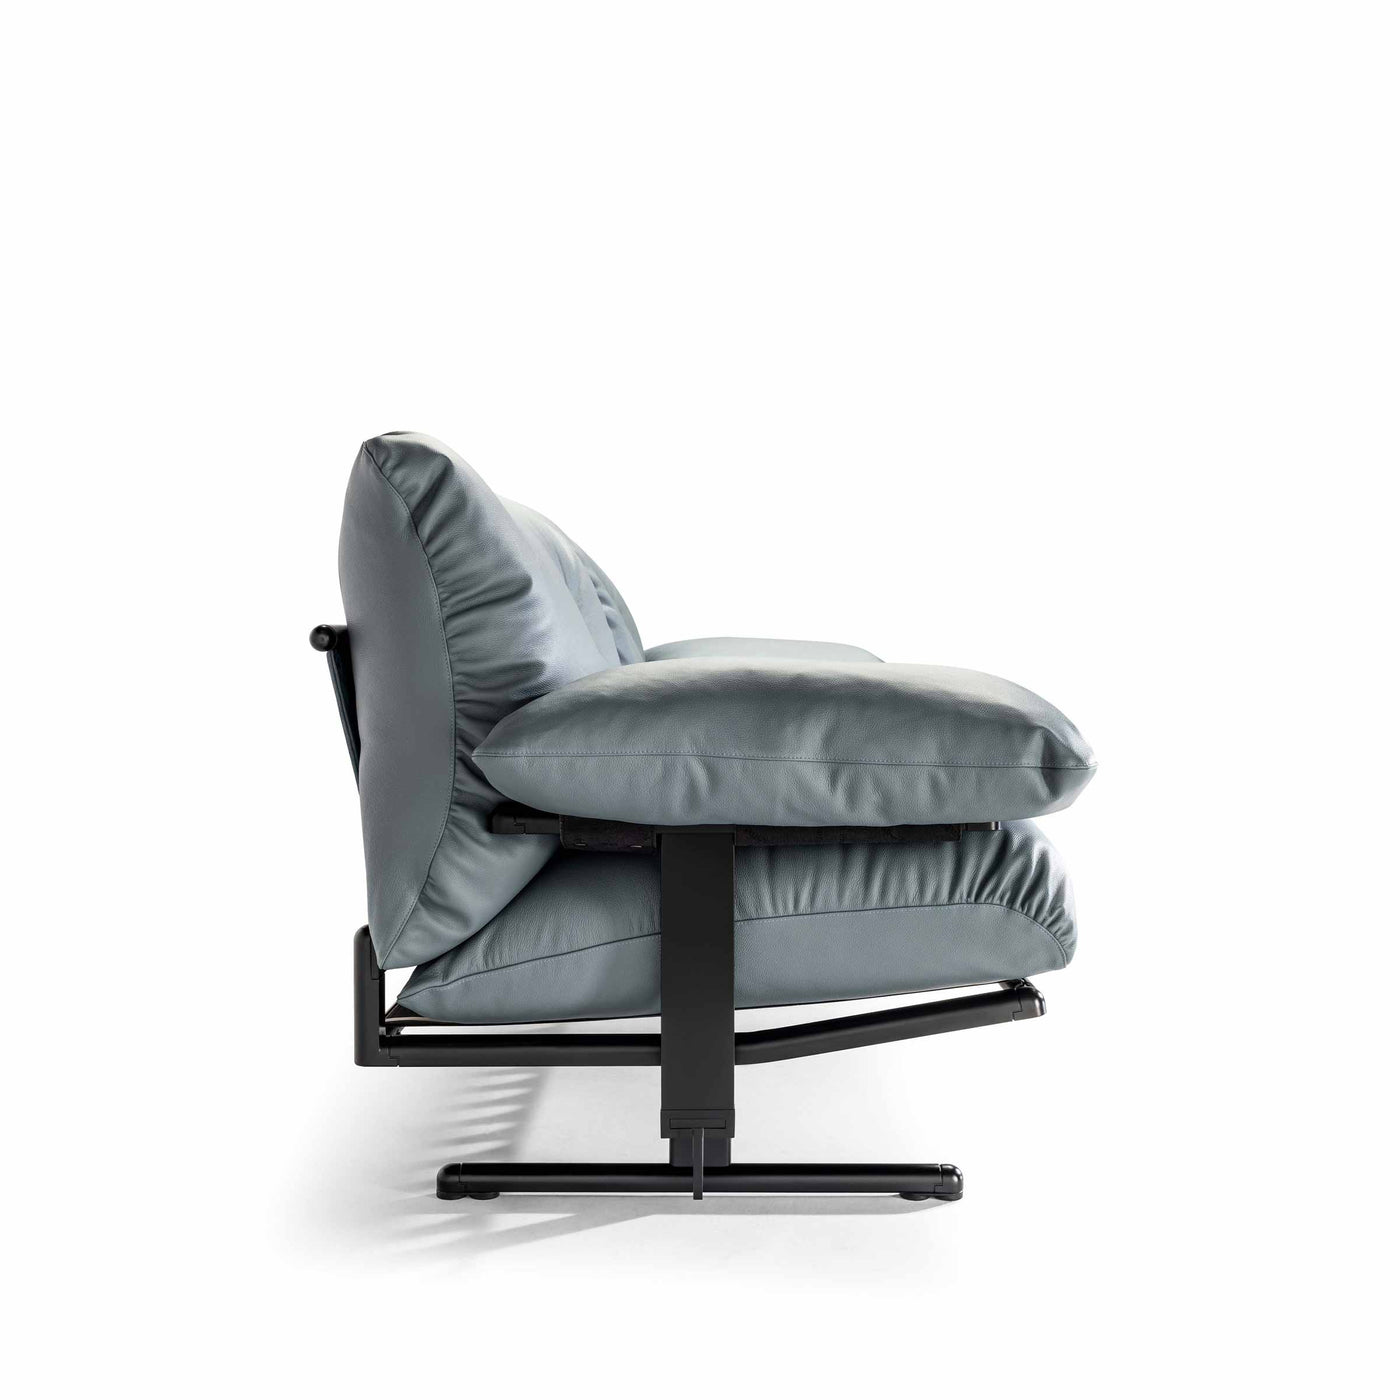 Leather Sofa OUVERTURE by Pierluigi Cerri for Poltrona Frau 08